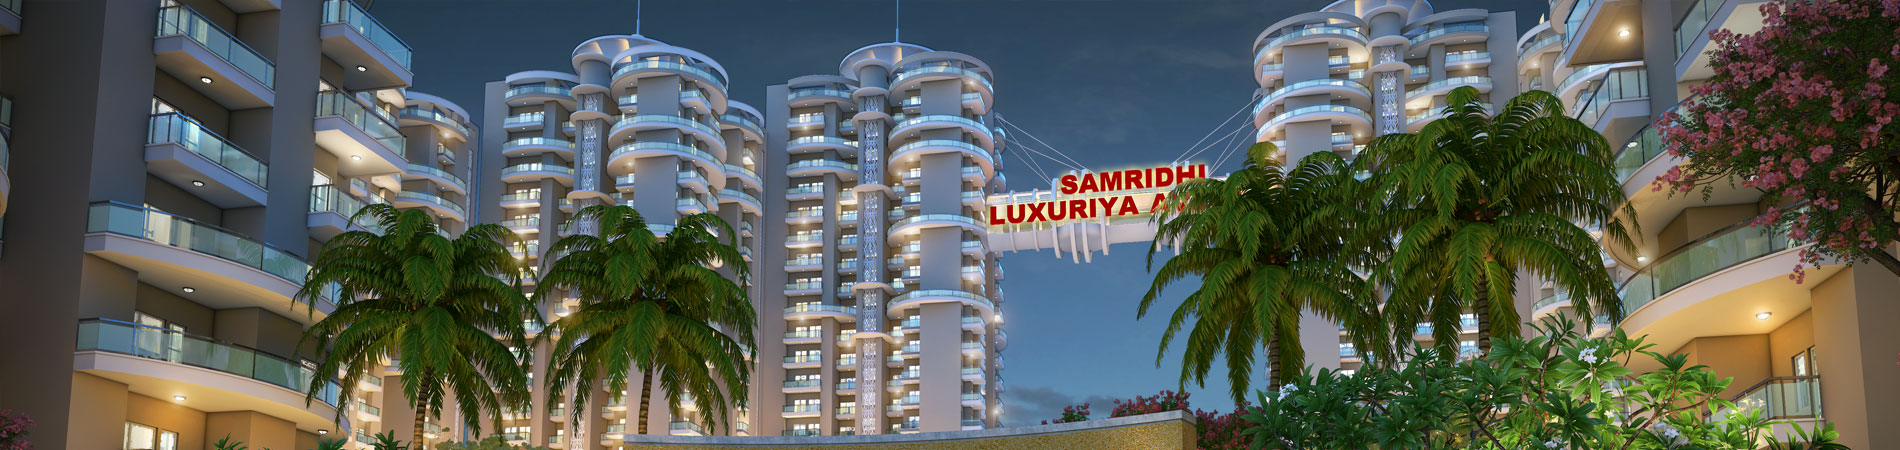 2 bhk, 3 bhk apartments in noida 150 - samridhi luxuriya avenue